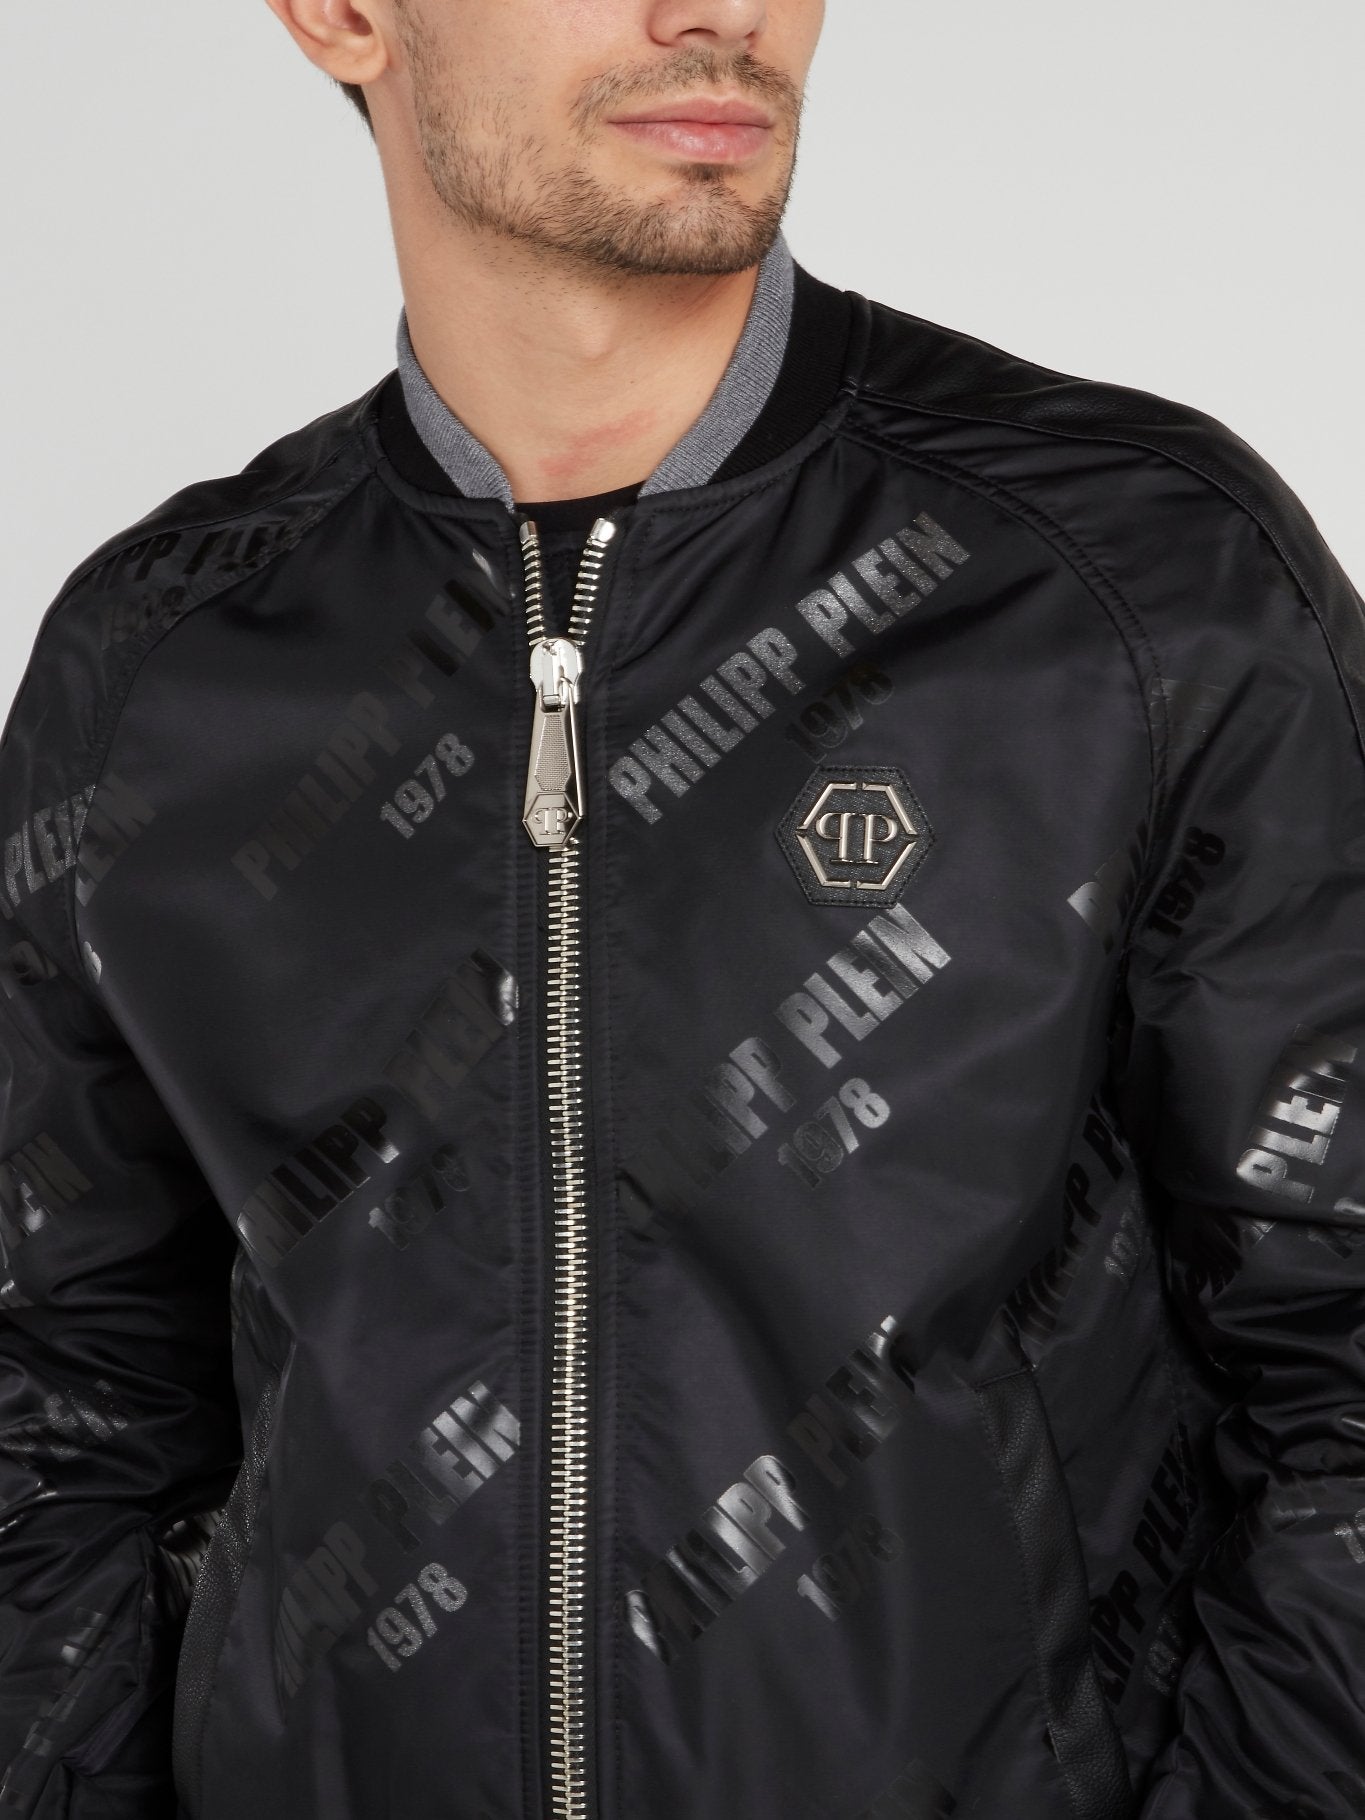 monogram printed leather biker jacket